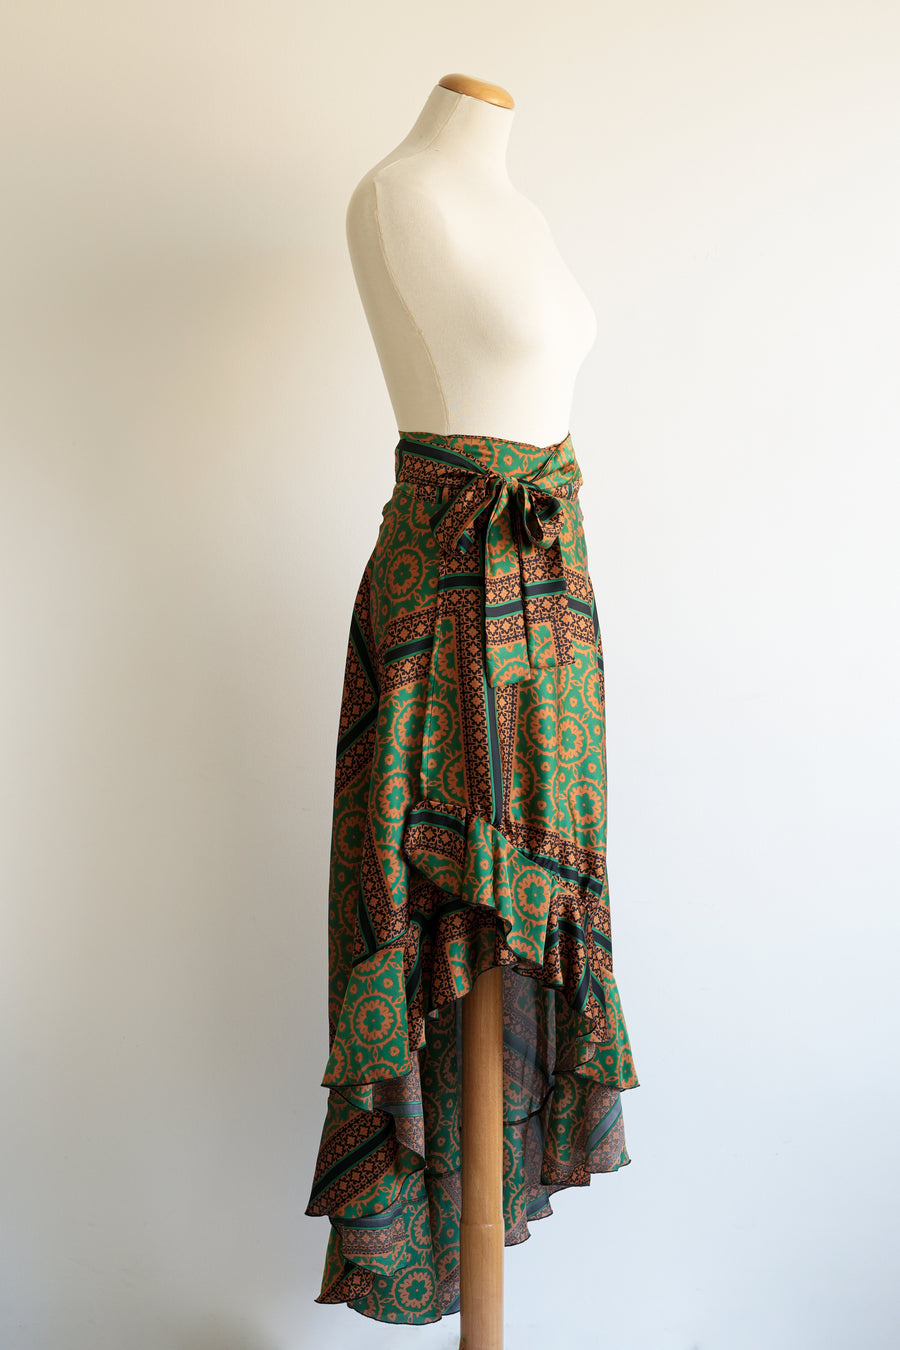 Manifesto wrap multiform skirt (satin print)